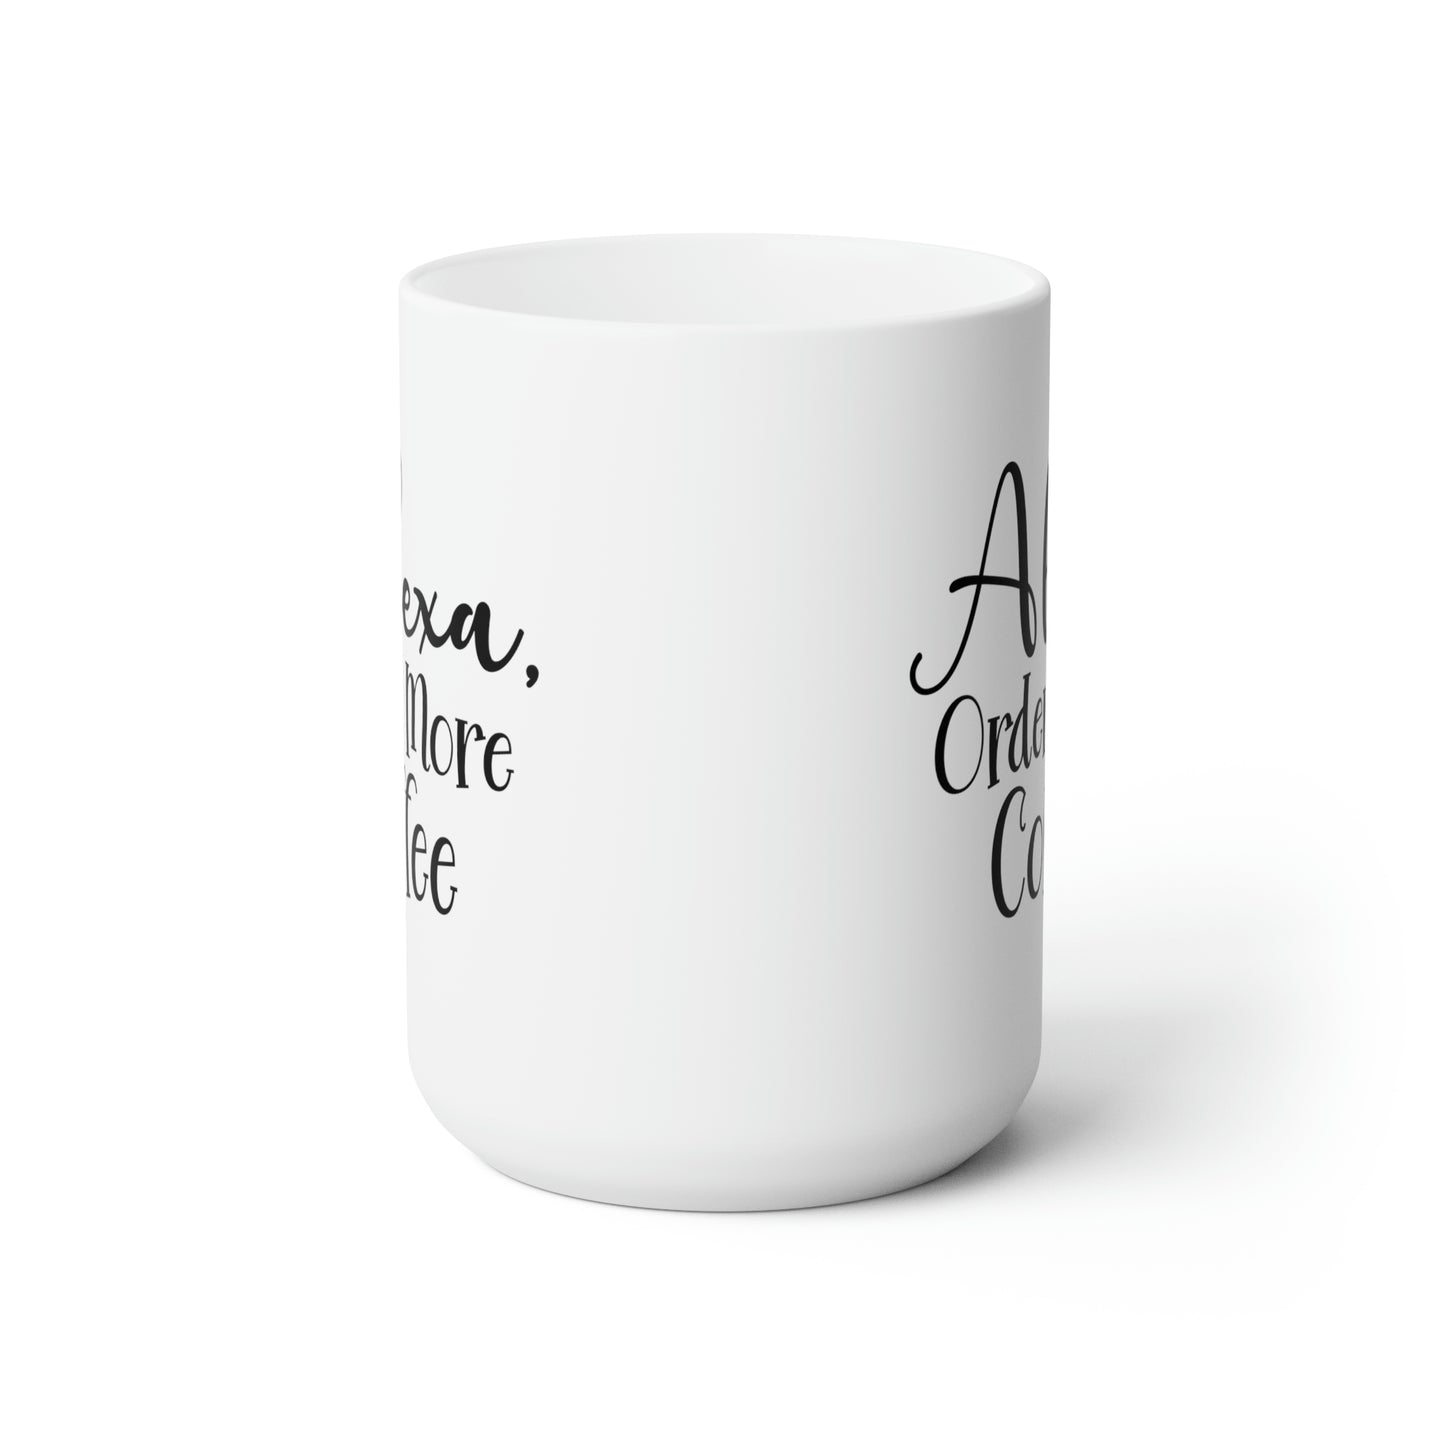 Alexa order More Coffee - Funny Coffee Mug